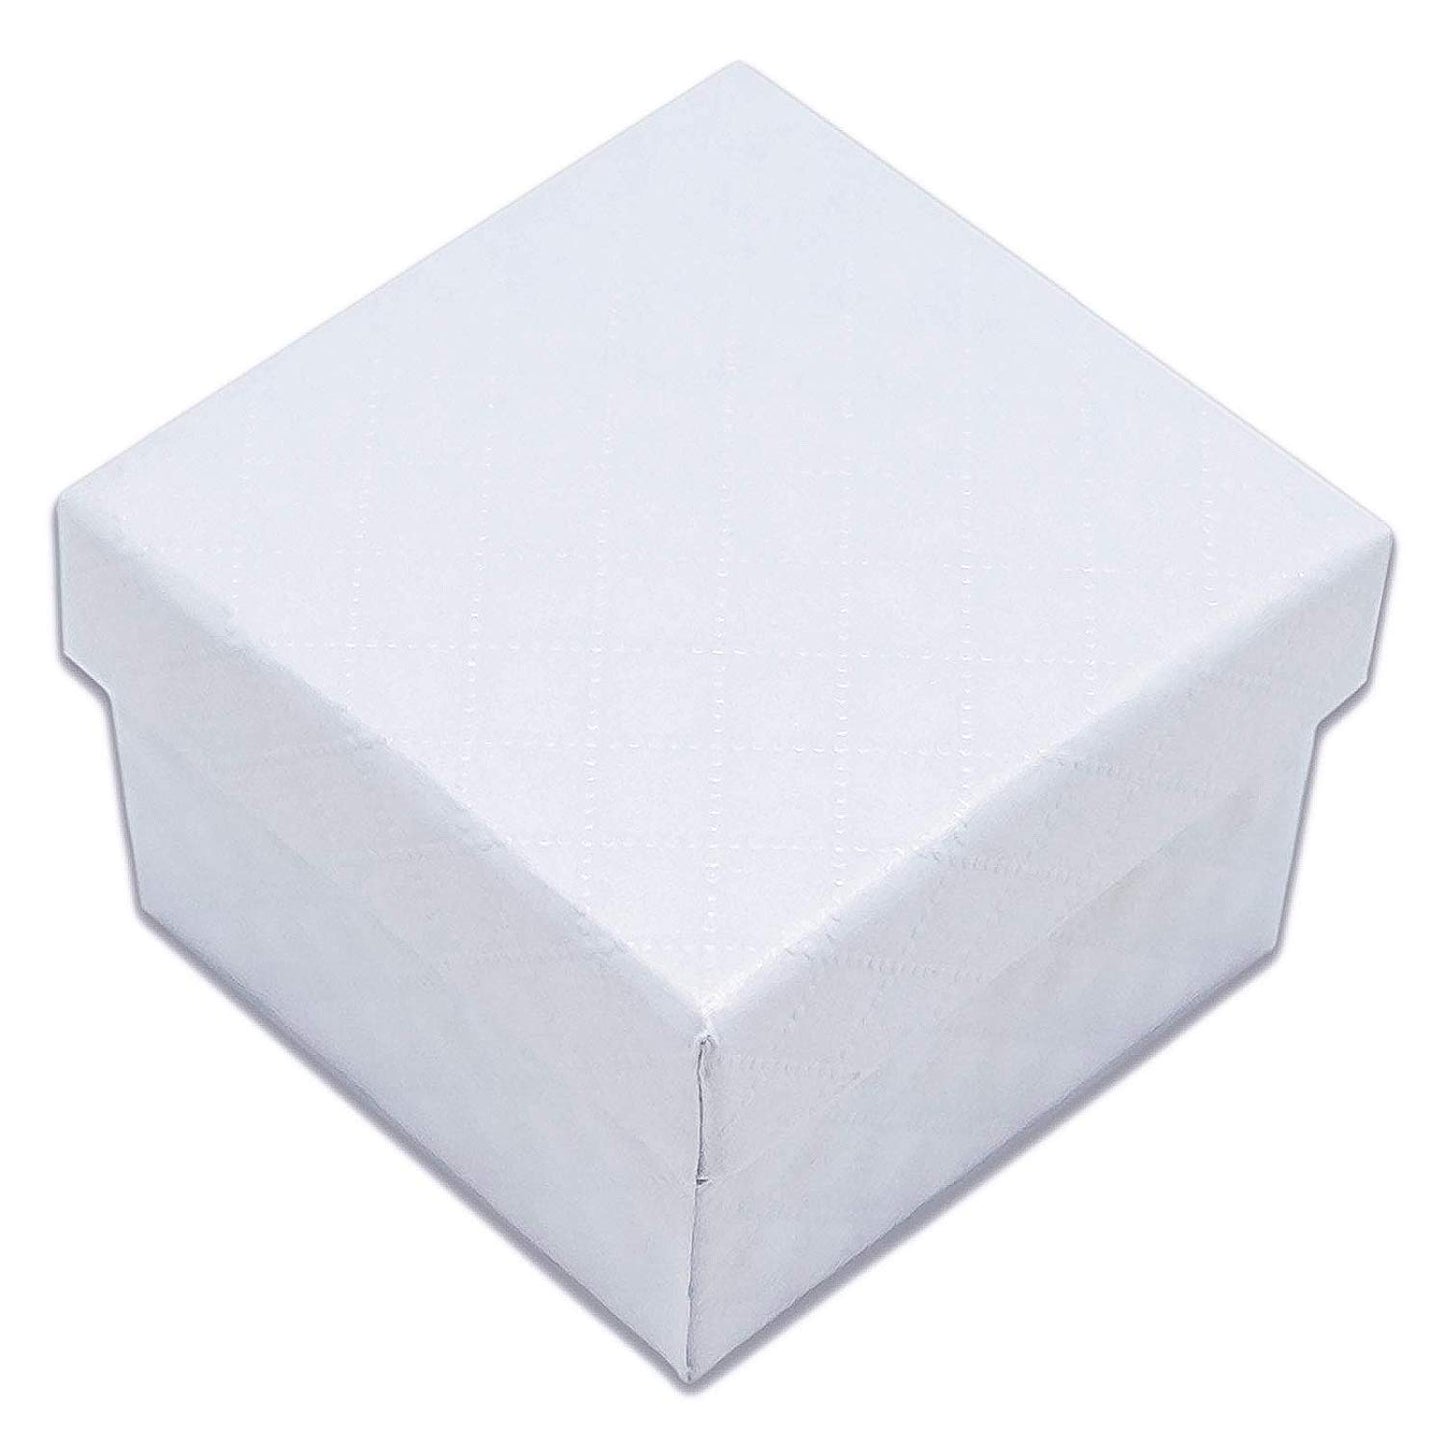 1 3/4" x 1 3/4" White Diamond Pattern Cardboard Jewelry Box